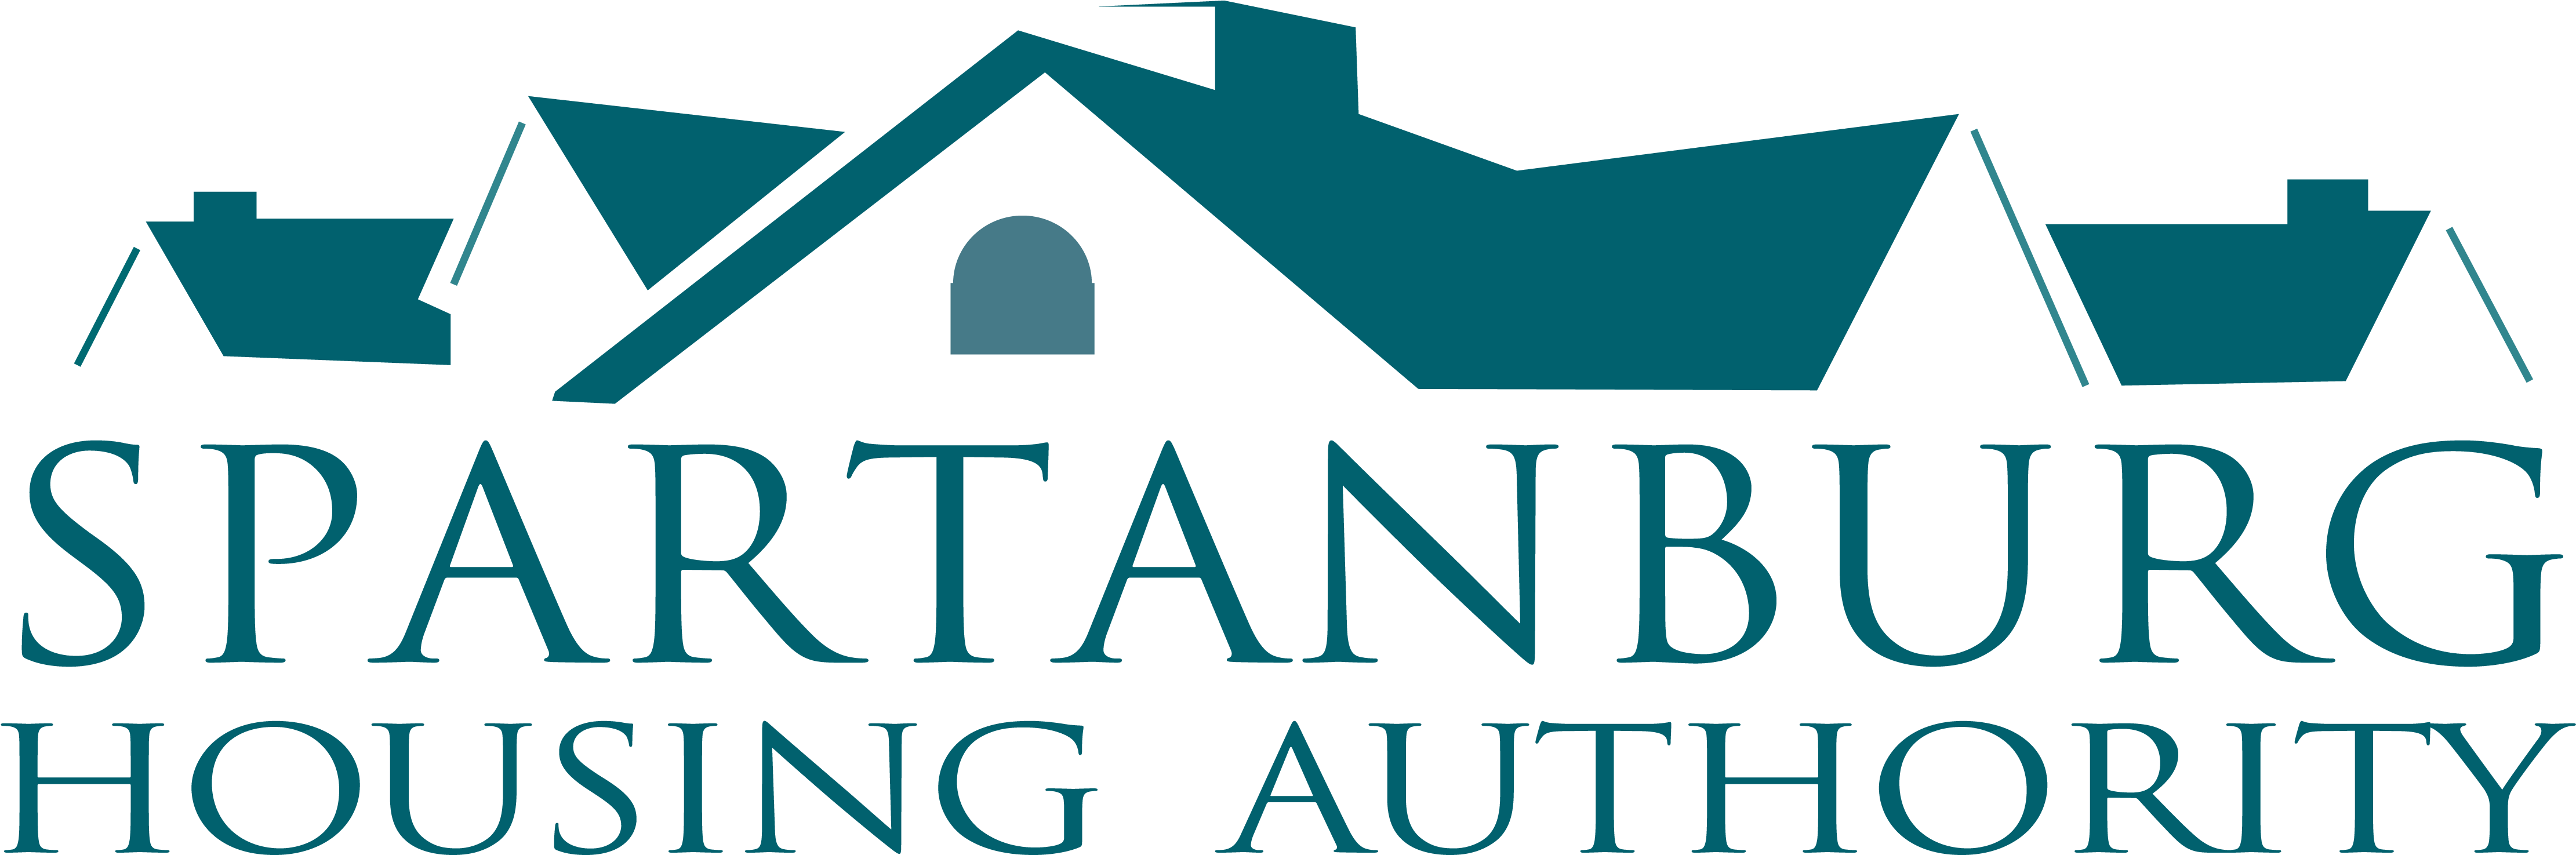 Spartanburg Housing Authority Logo - Spartanburg Housing Authority (4482x1590), Png Download